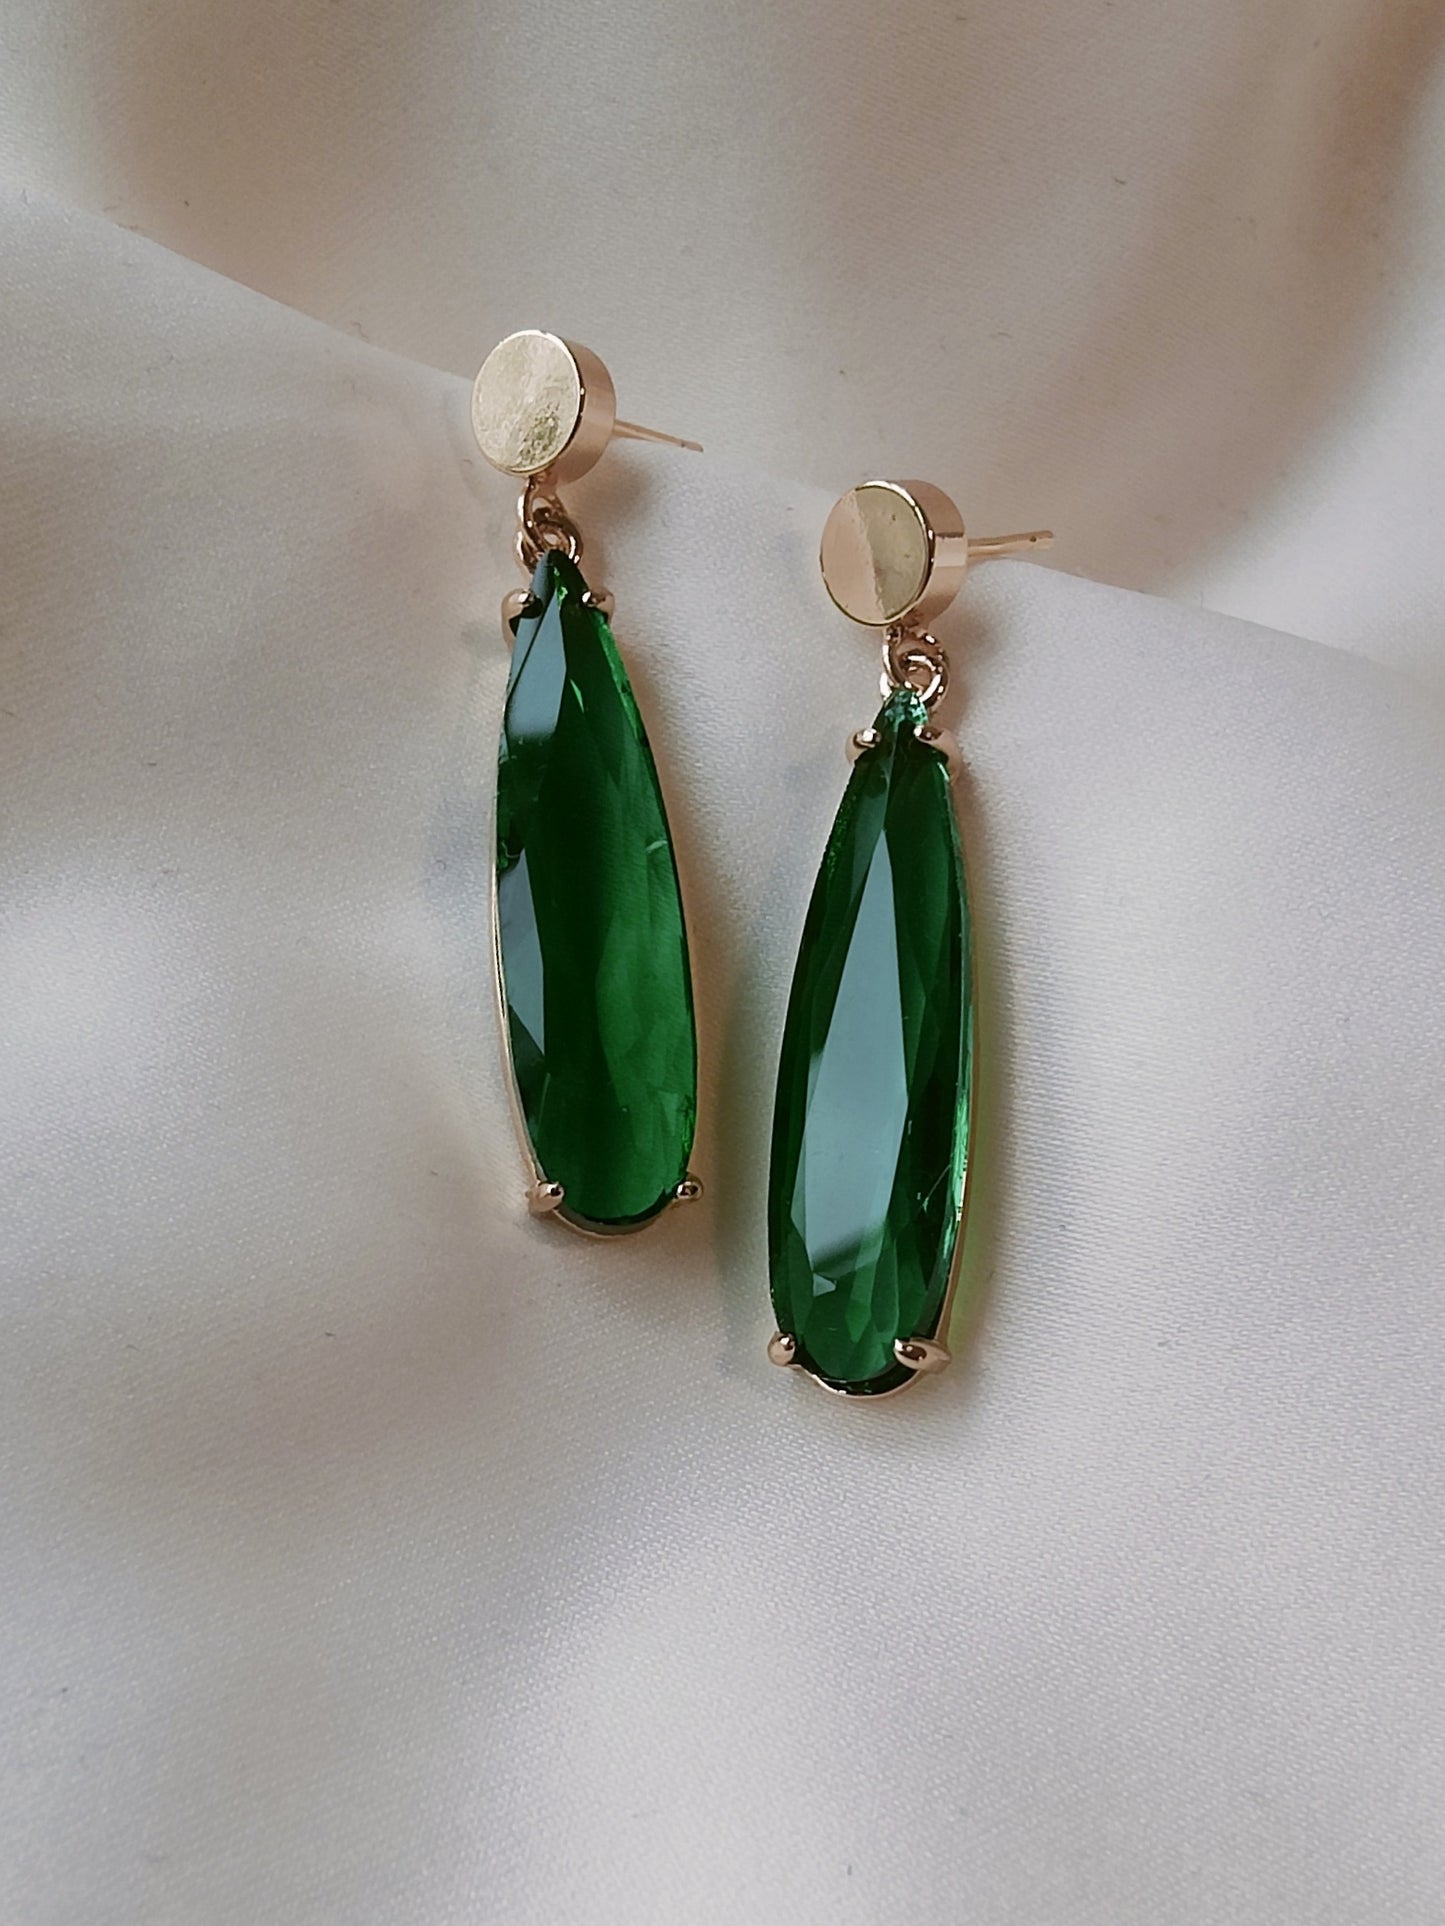 HELEN - Cluaise Buail Criostail Fada - Emerald